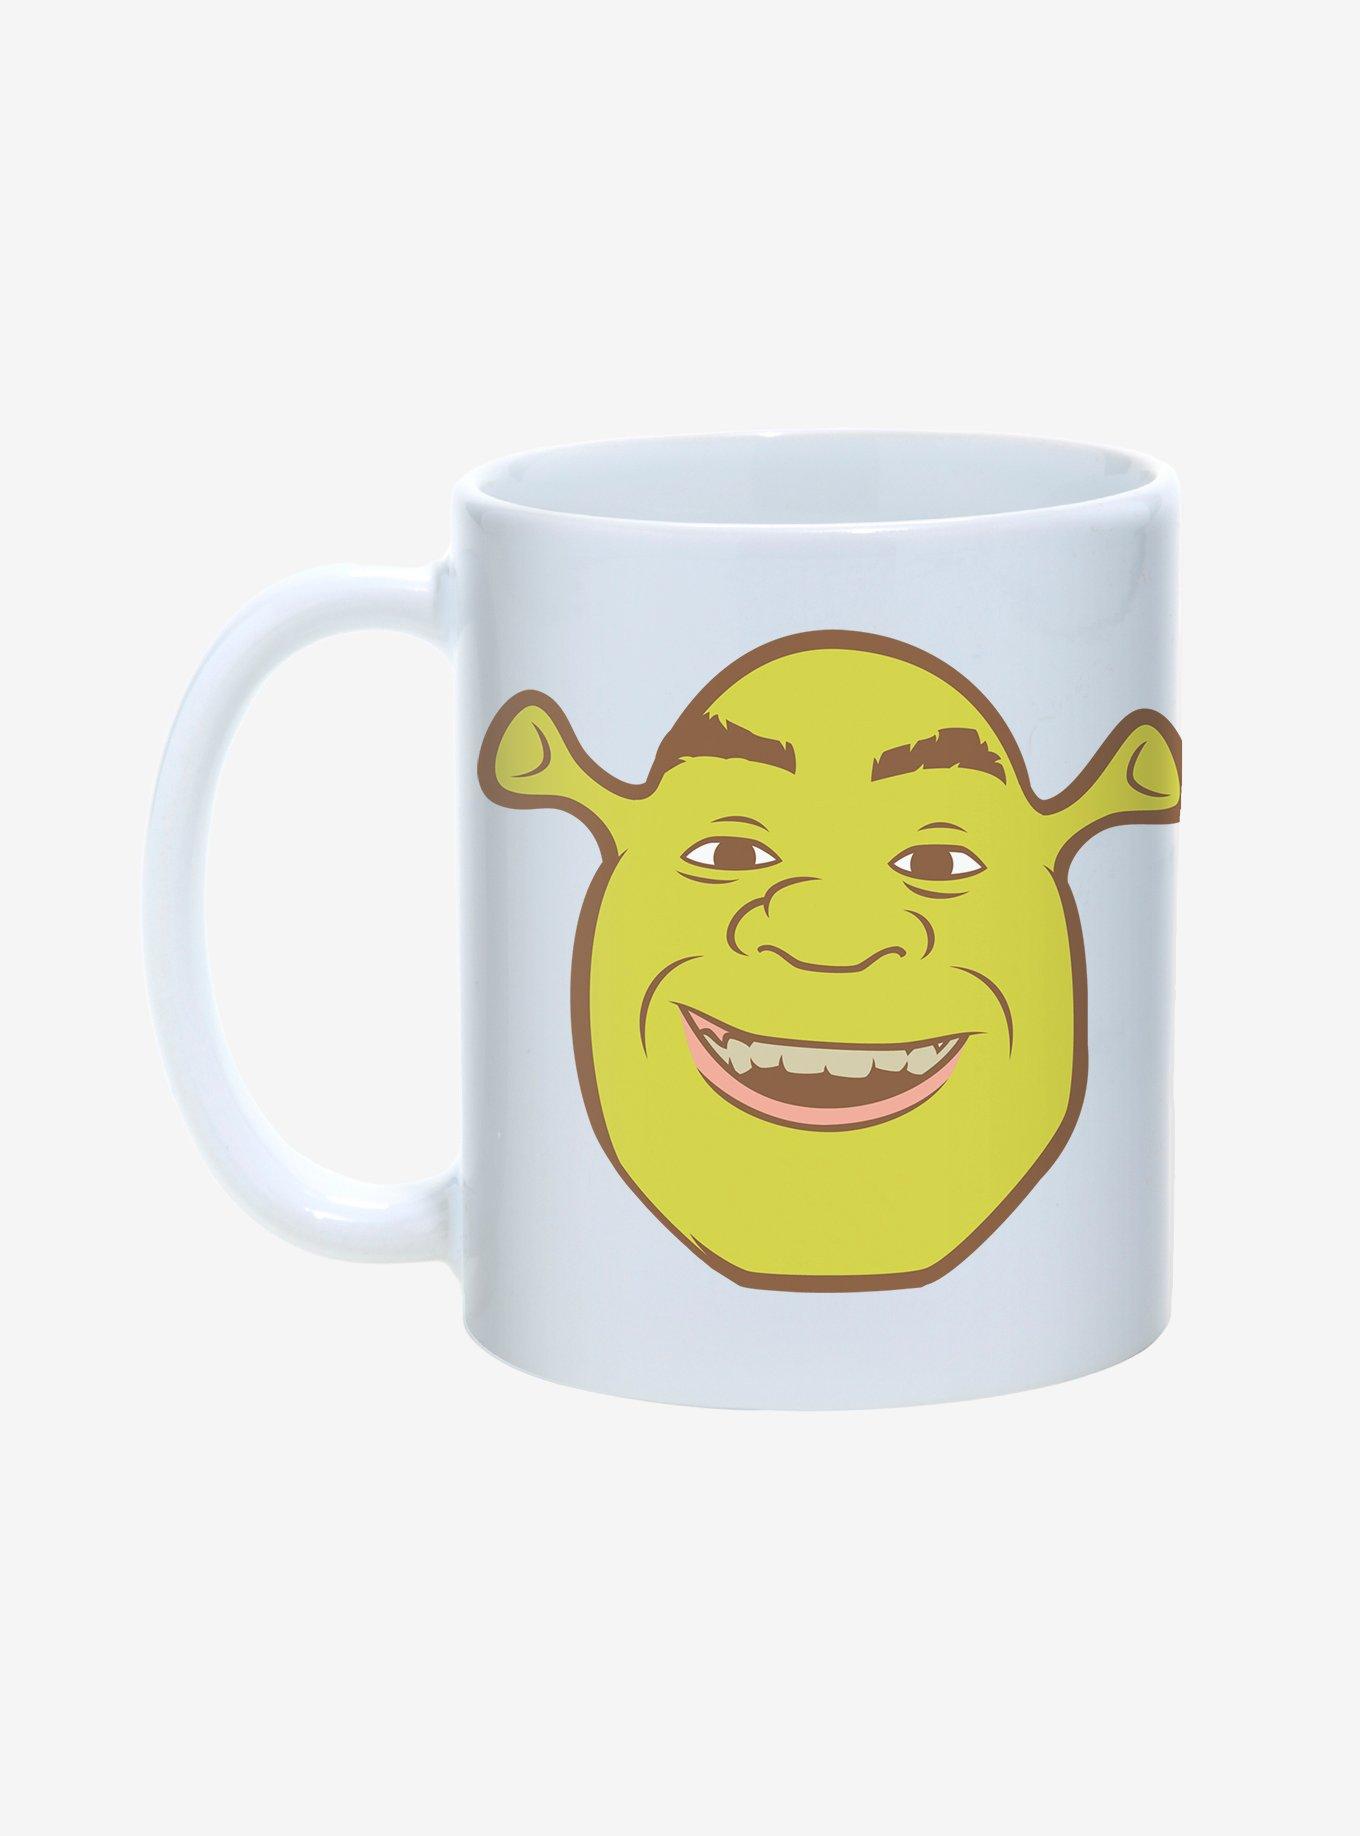 Shrek's Face - Shrek - Pin